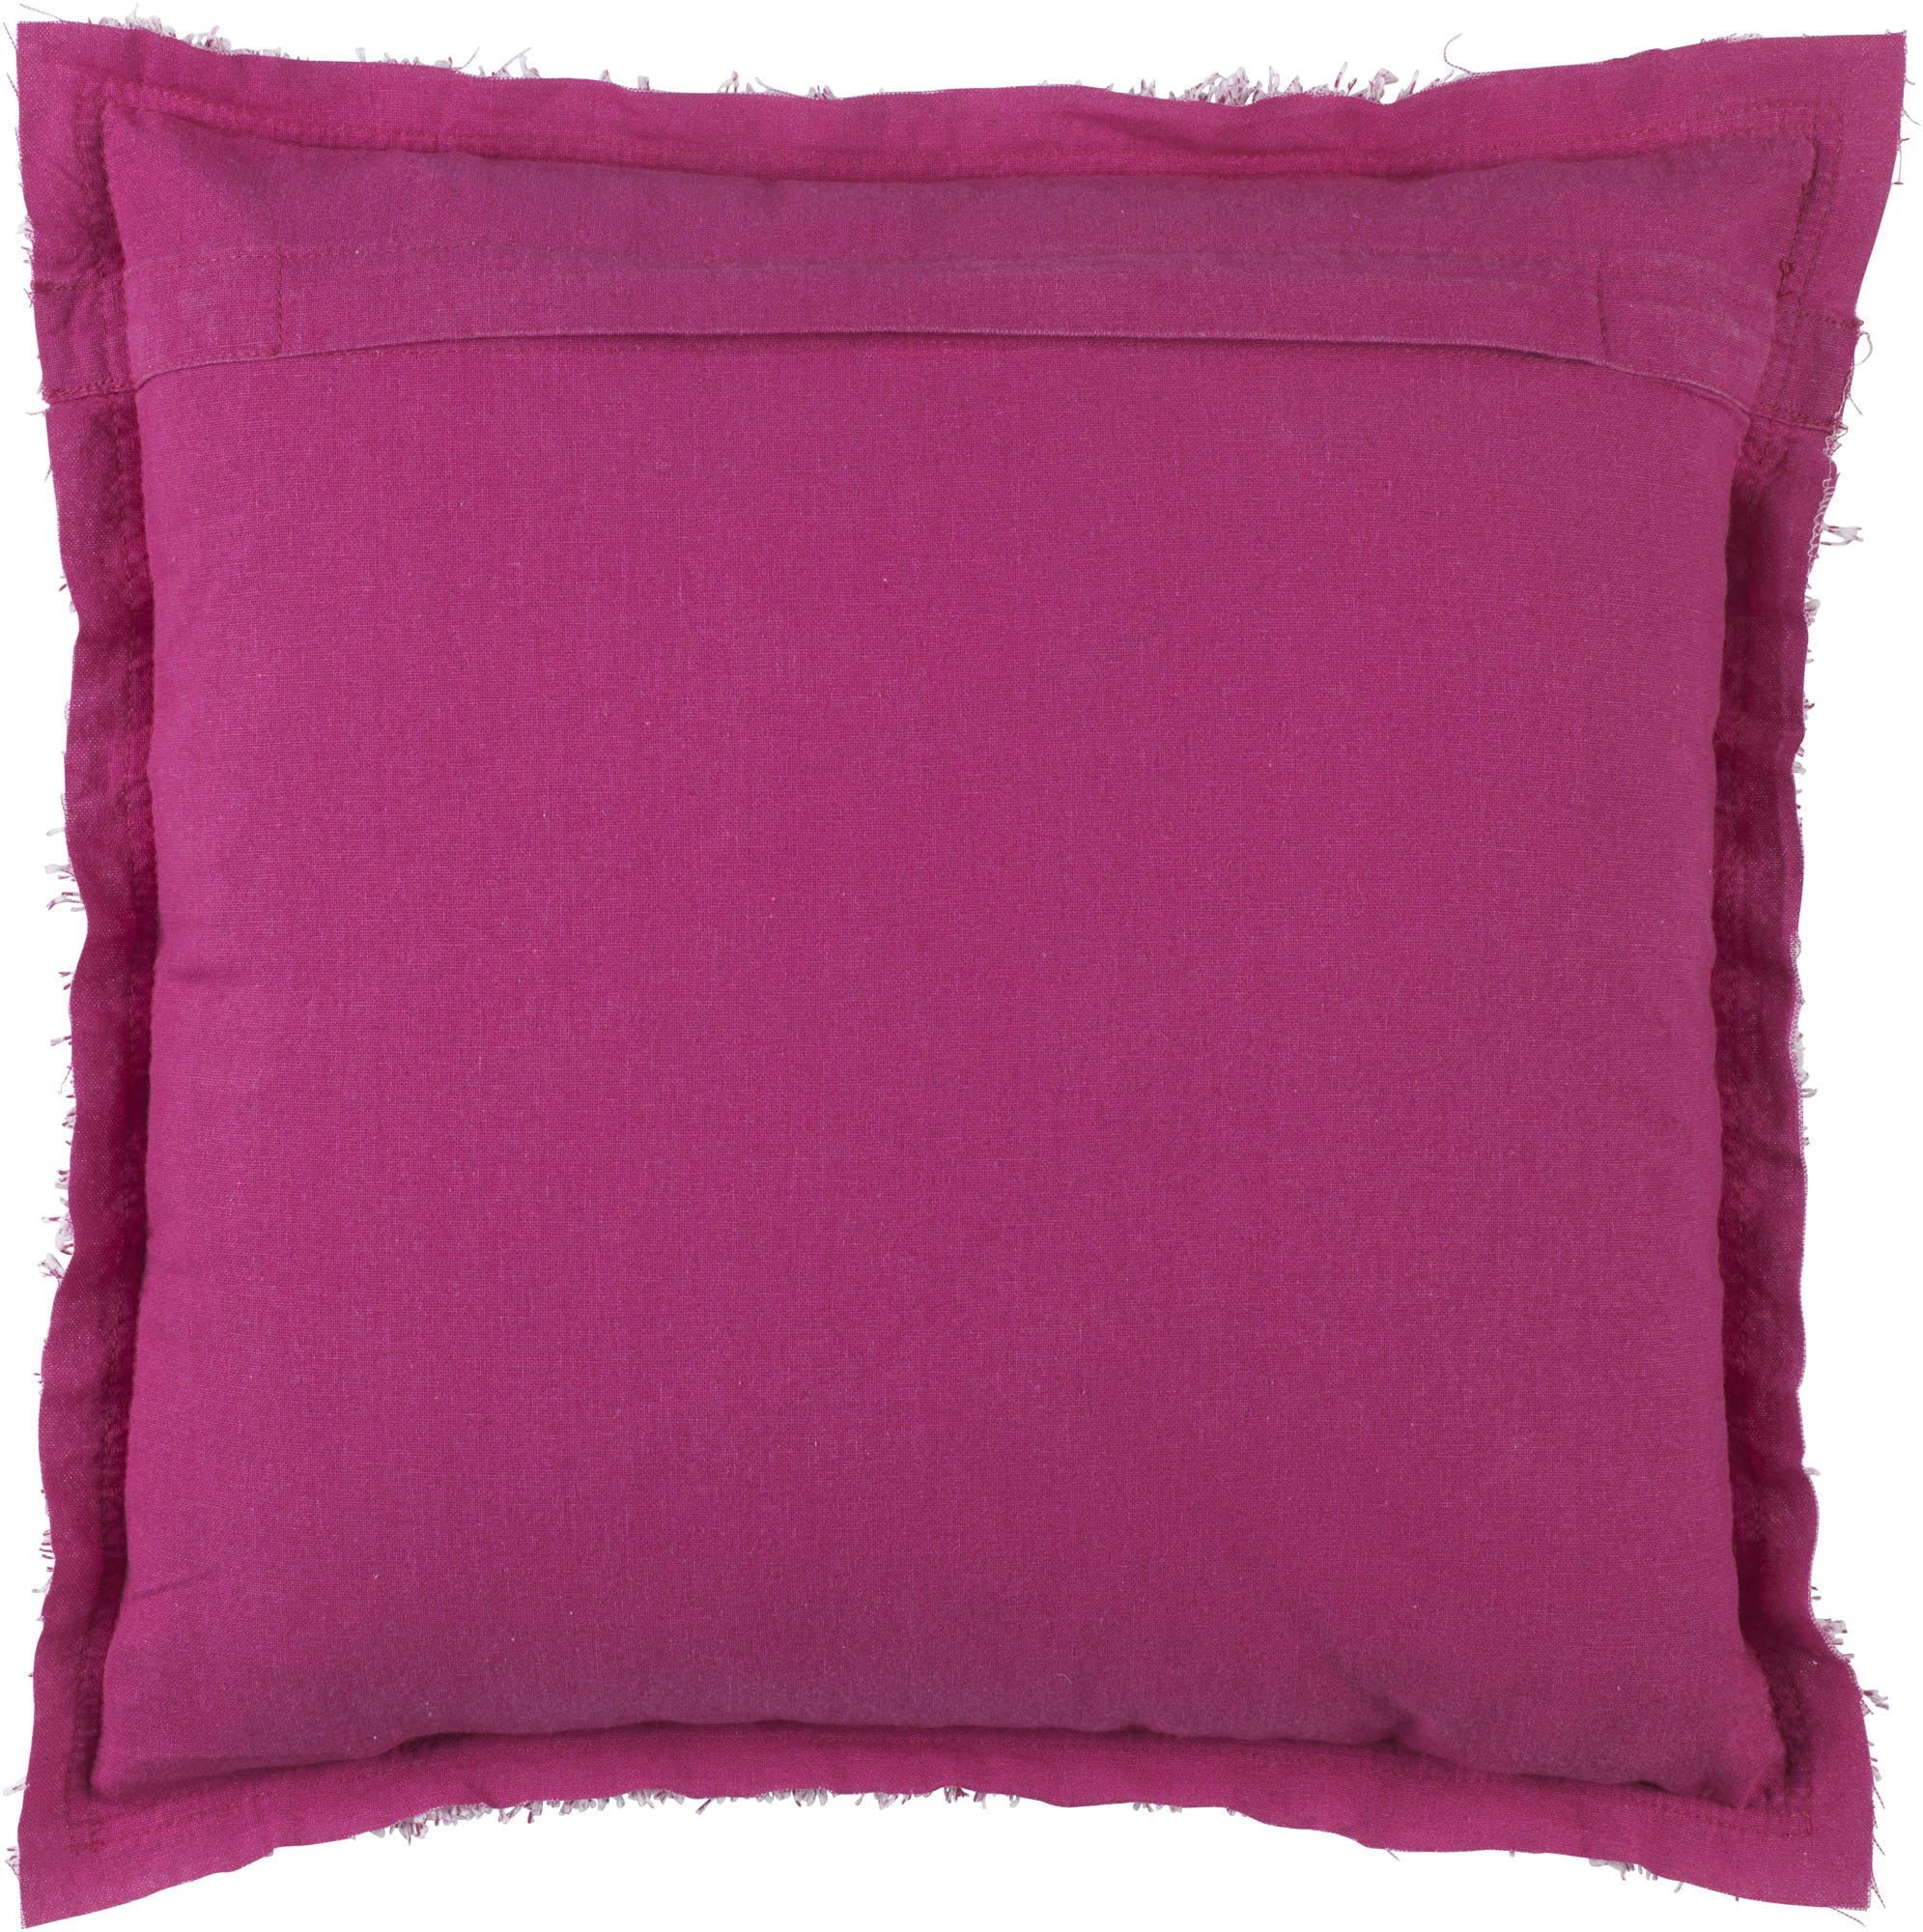 BURTO - Sierkussen XL - 70x70 cm  fuchsia -  roze - van gewassen katoen - lounge kussen